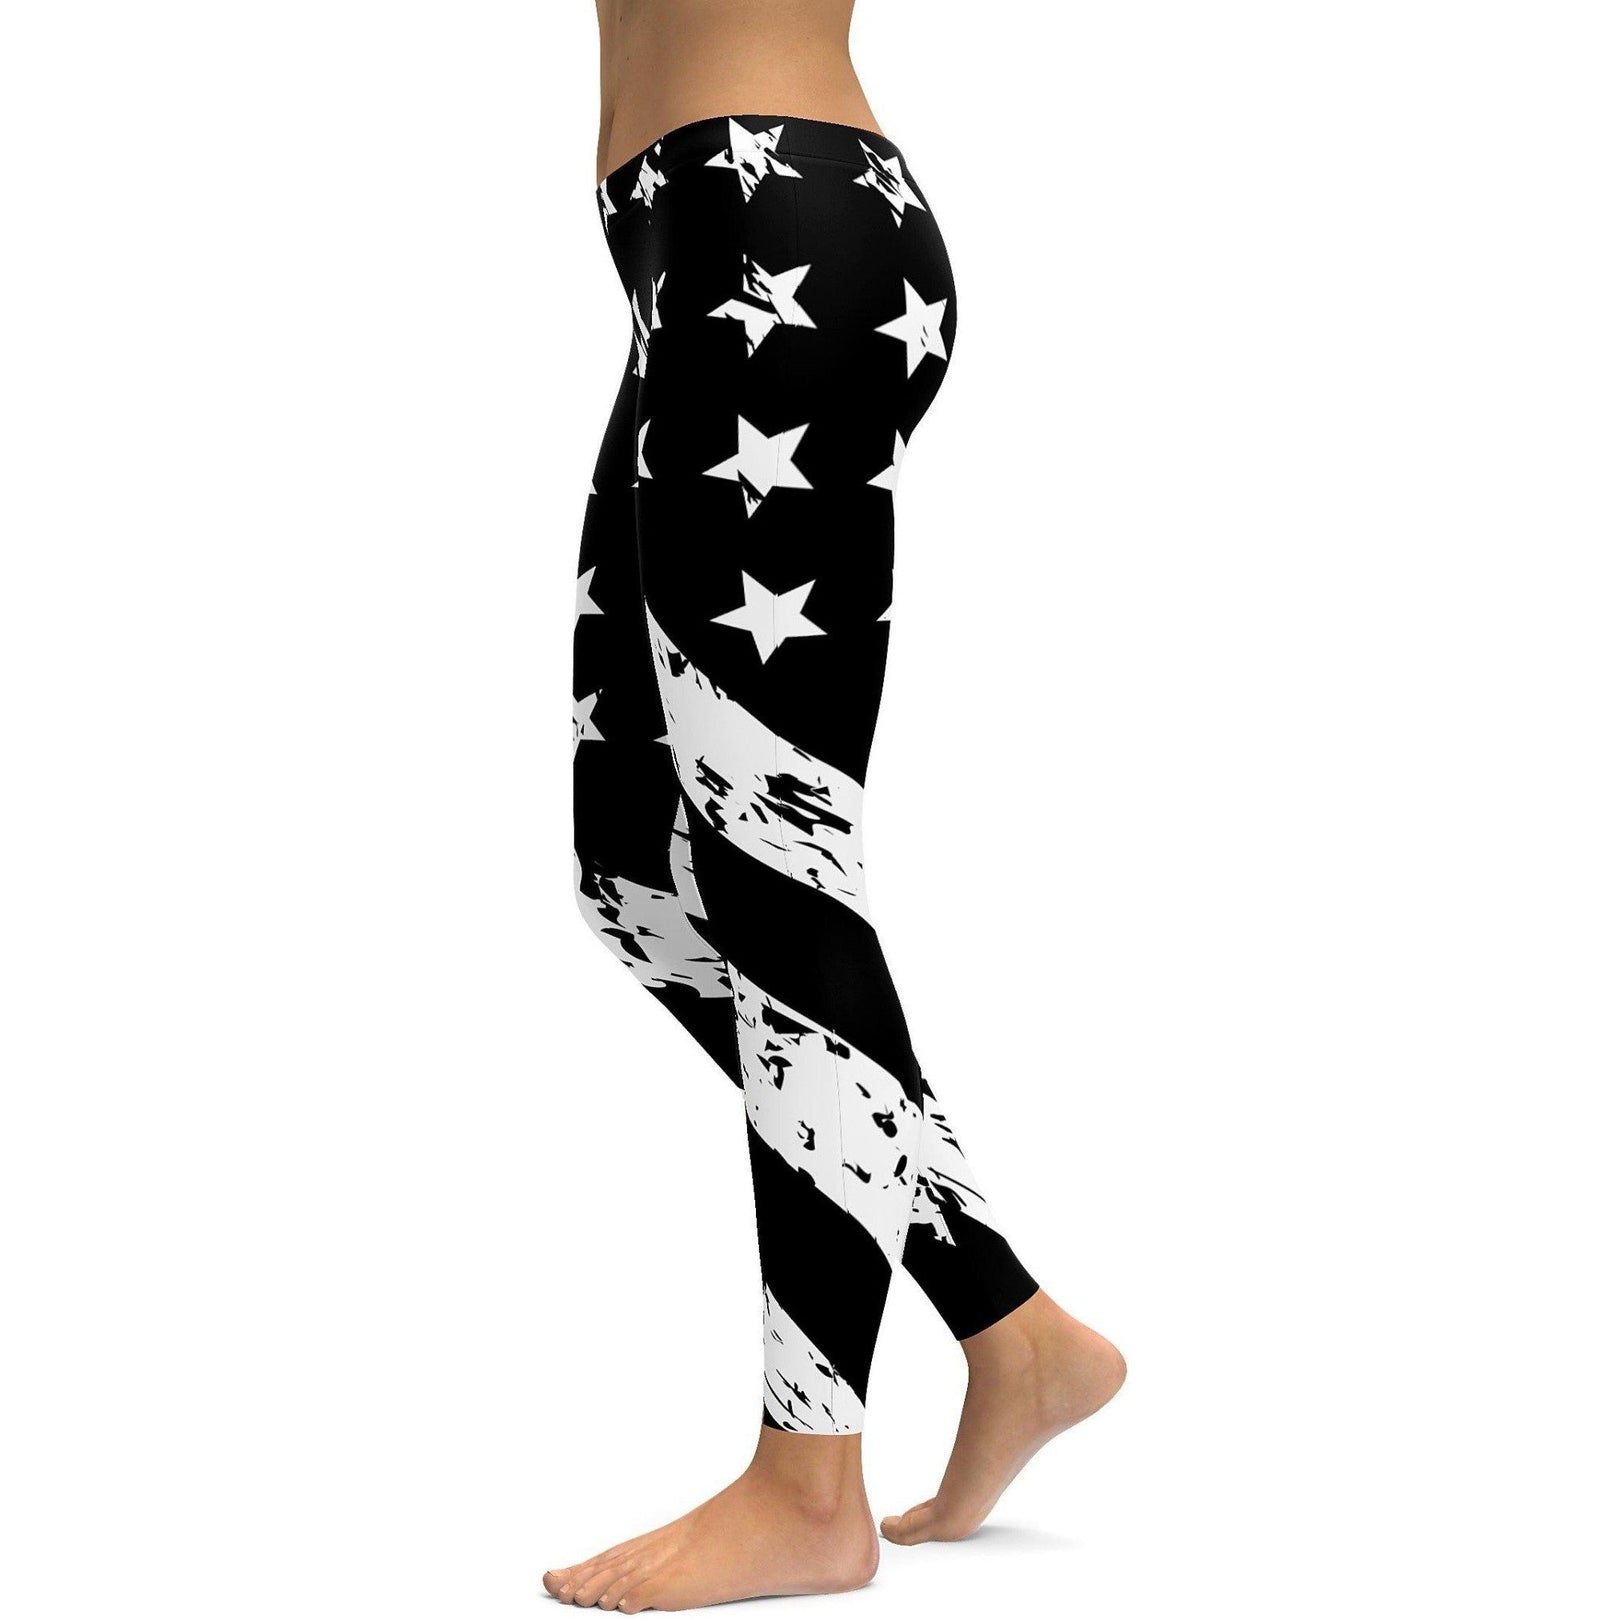 Black_And_White_American_Flag_Leggings_Yoga_Pants_Printed_Leggings_Patterned_Leggings